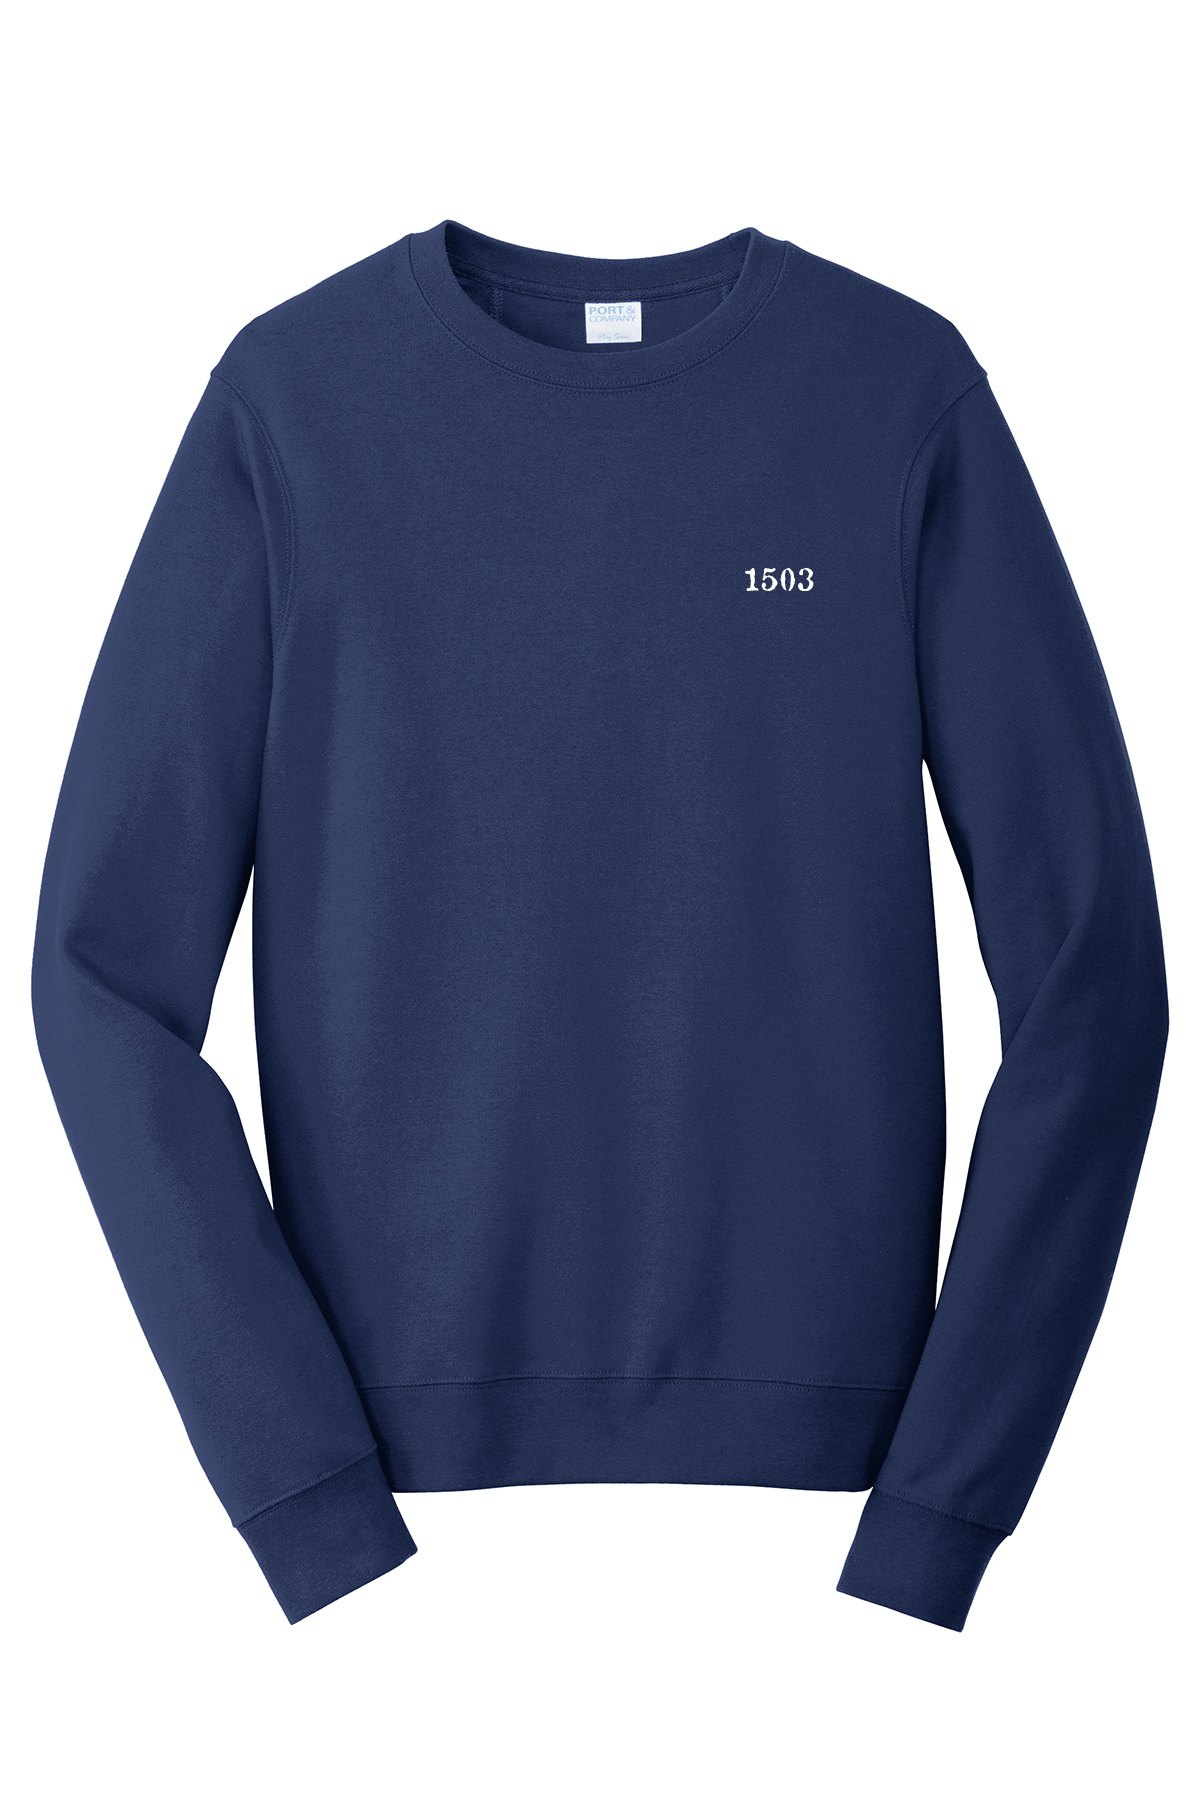 Navy Blue 1503 Sweatshirt